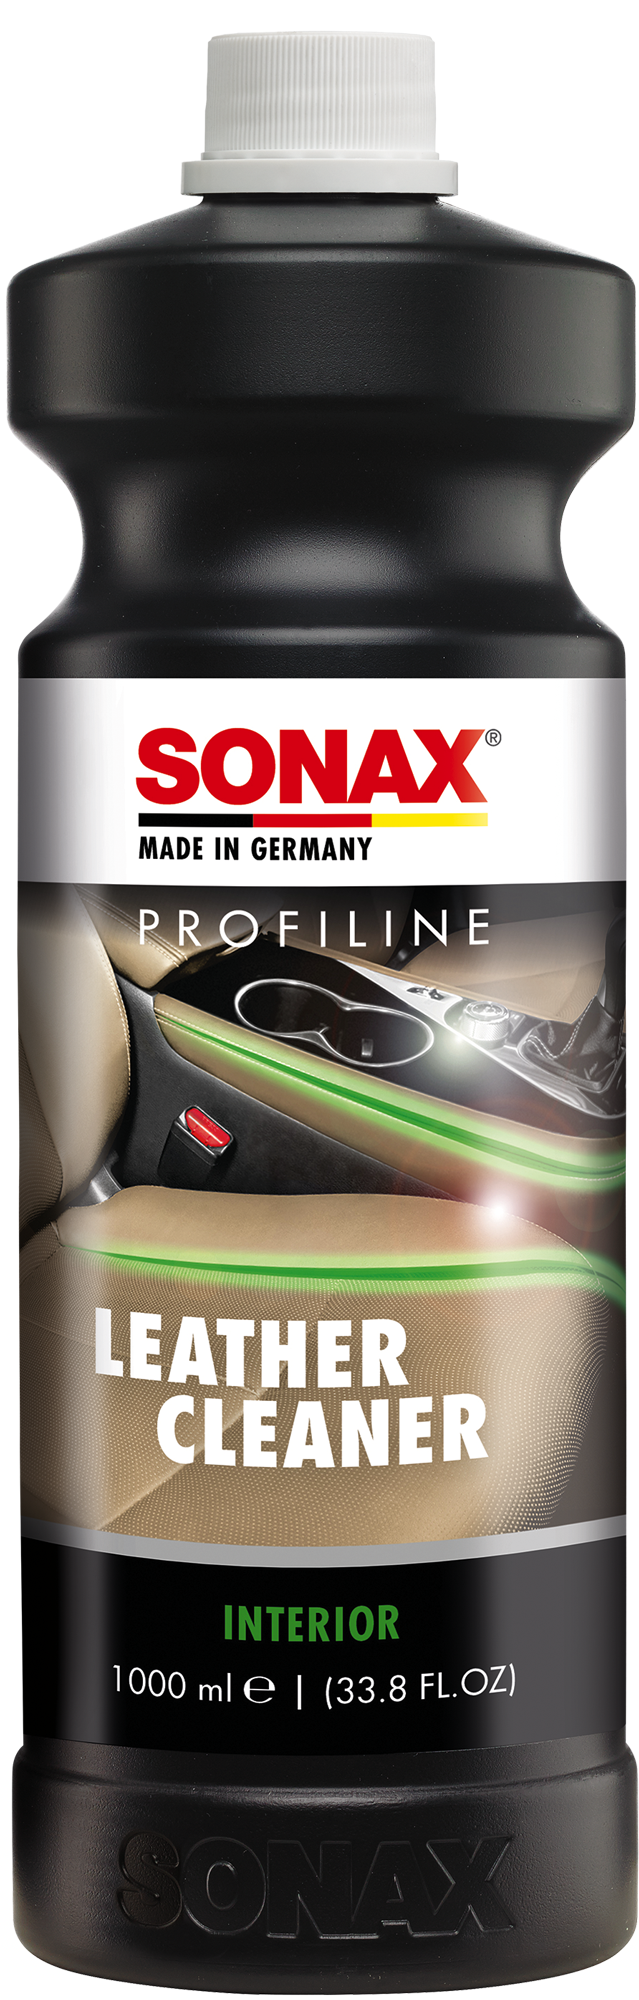 SONAX PROFILINE LeatherCleaner 1l - Weigola Hygienevertrieb -  - Weigola Hygienevertrieb